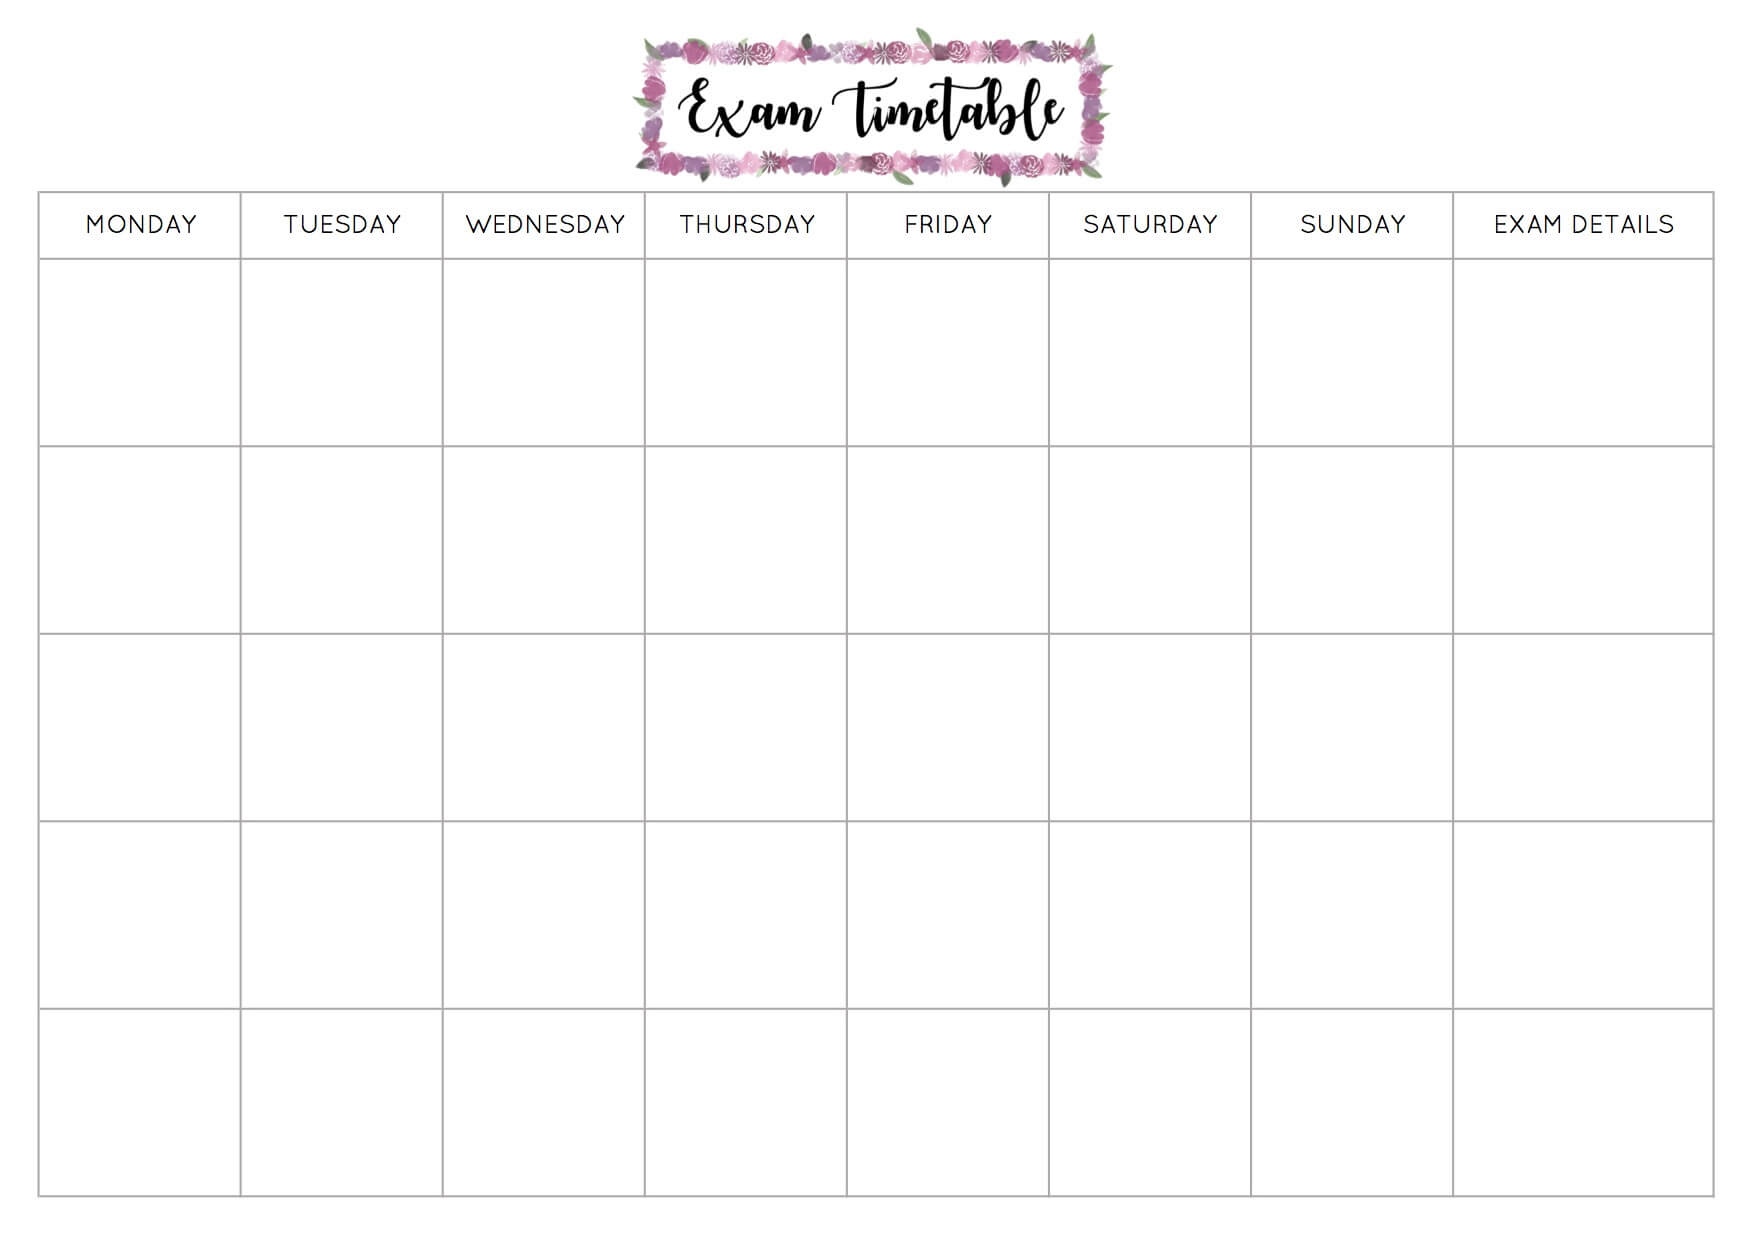 Free Exam Timetable Printable – Emily Studies Within Blank Revision Timetable Template